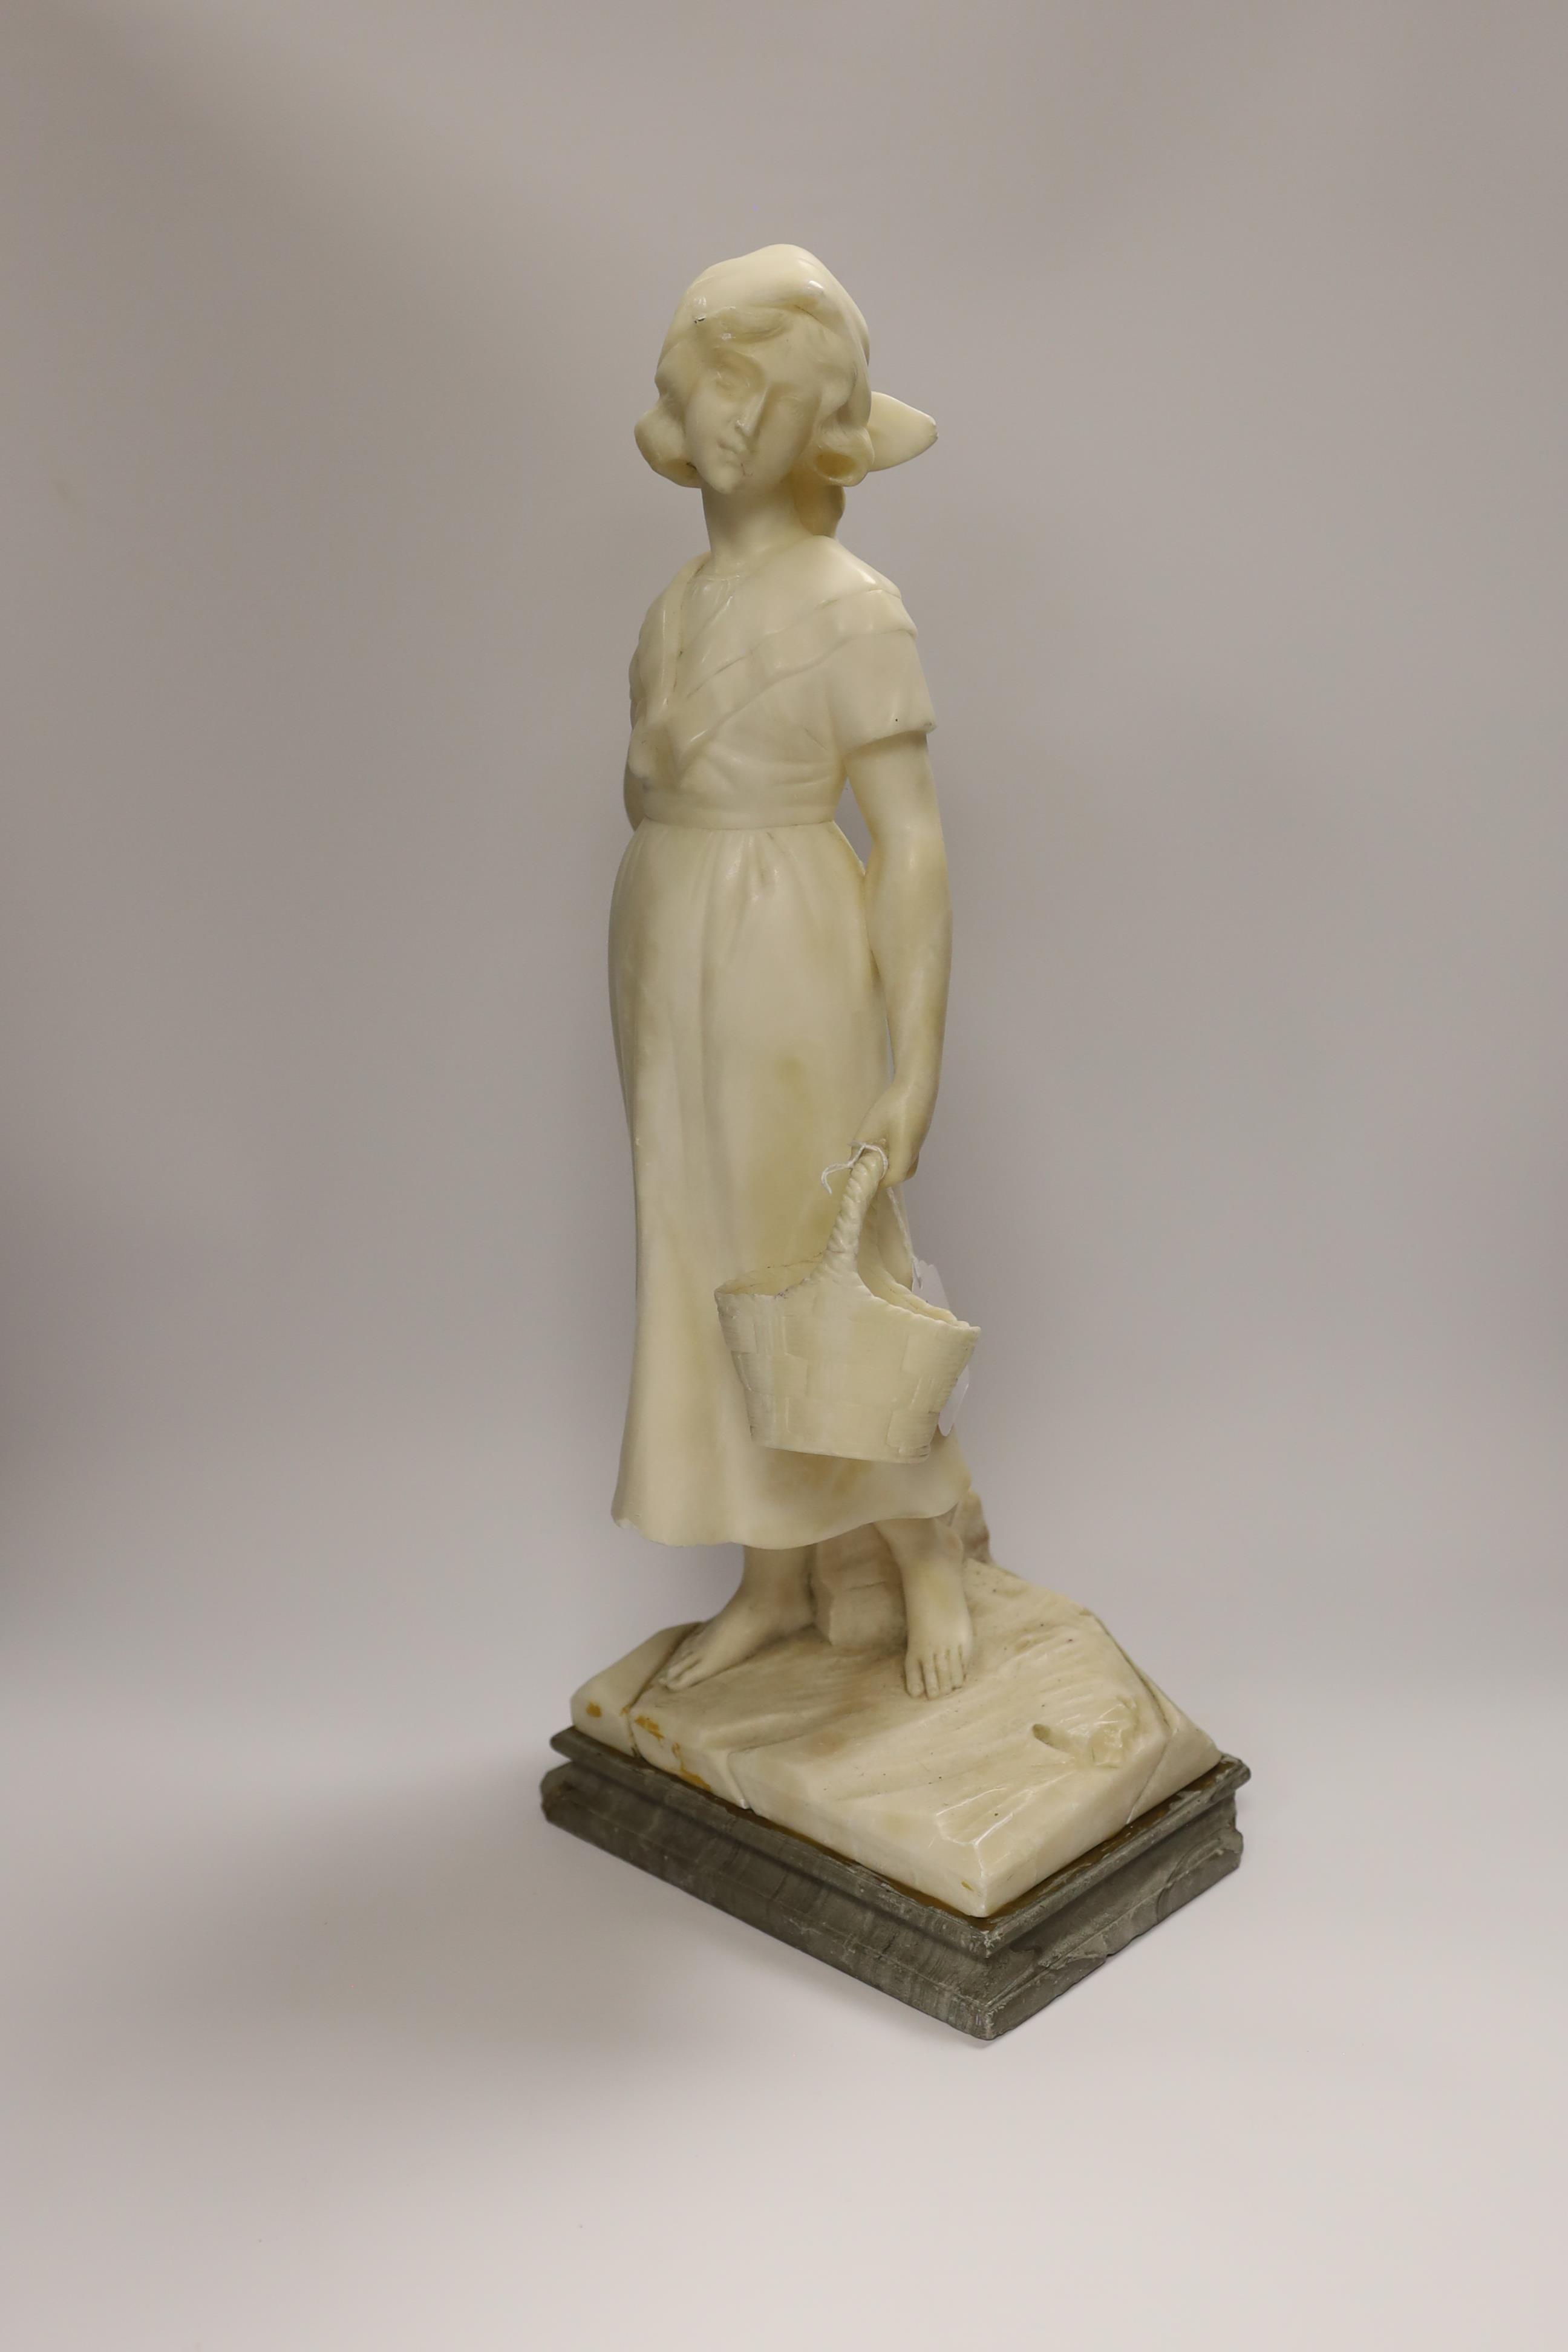 An alabaster carved figure of a girl holding a basket, 51cm high - Image 2 of 3